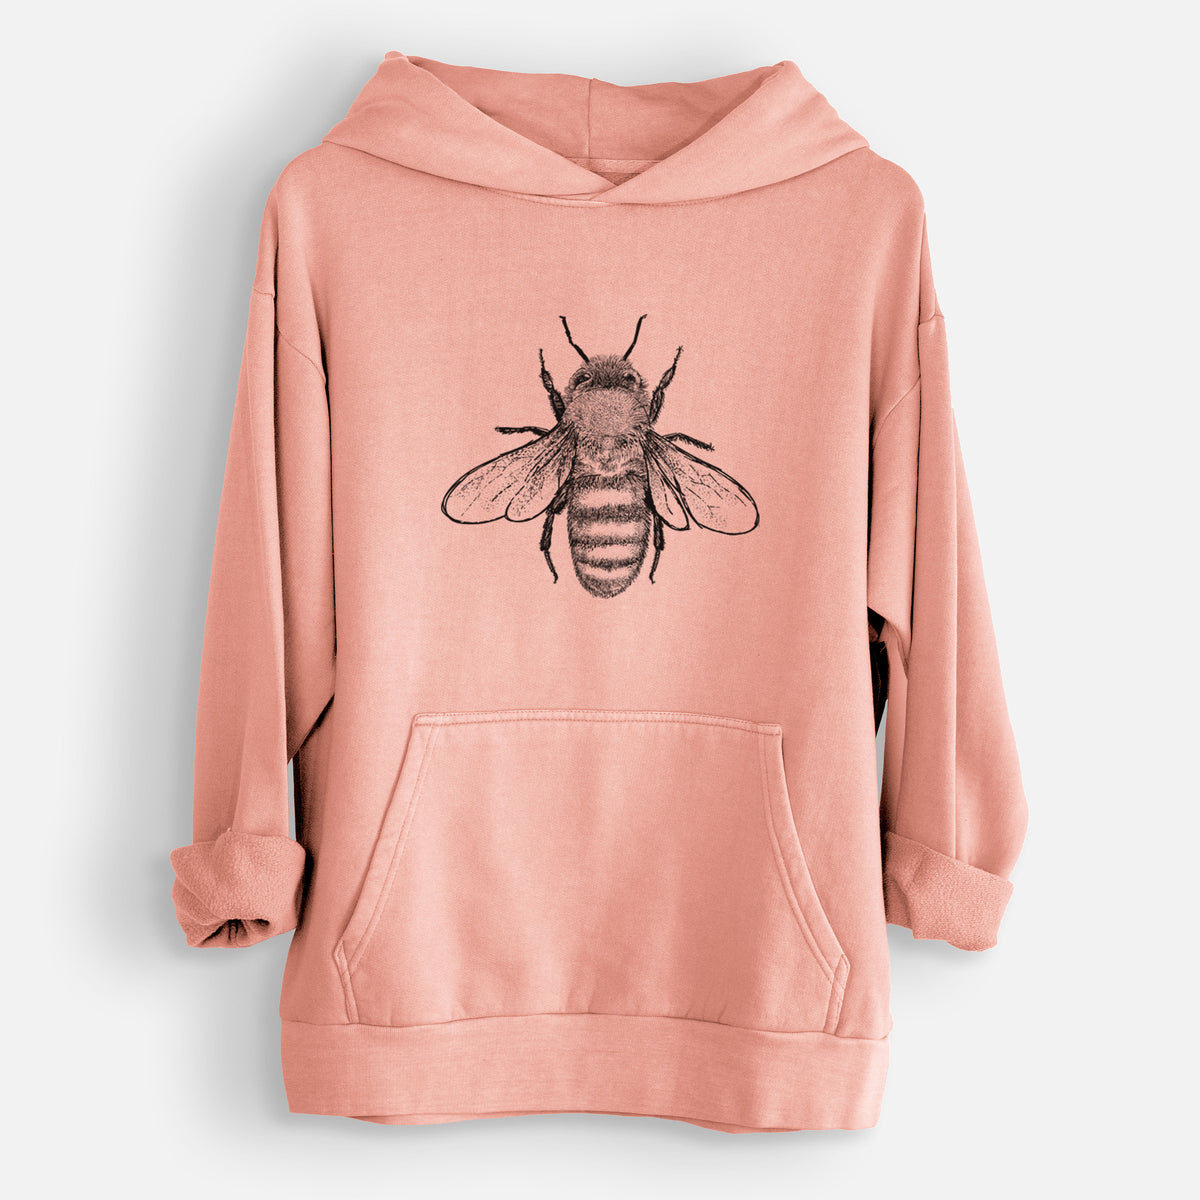 Apis Mellifera - Honey Bee  - Urban Heavyweight Hoodie